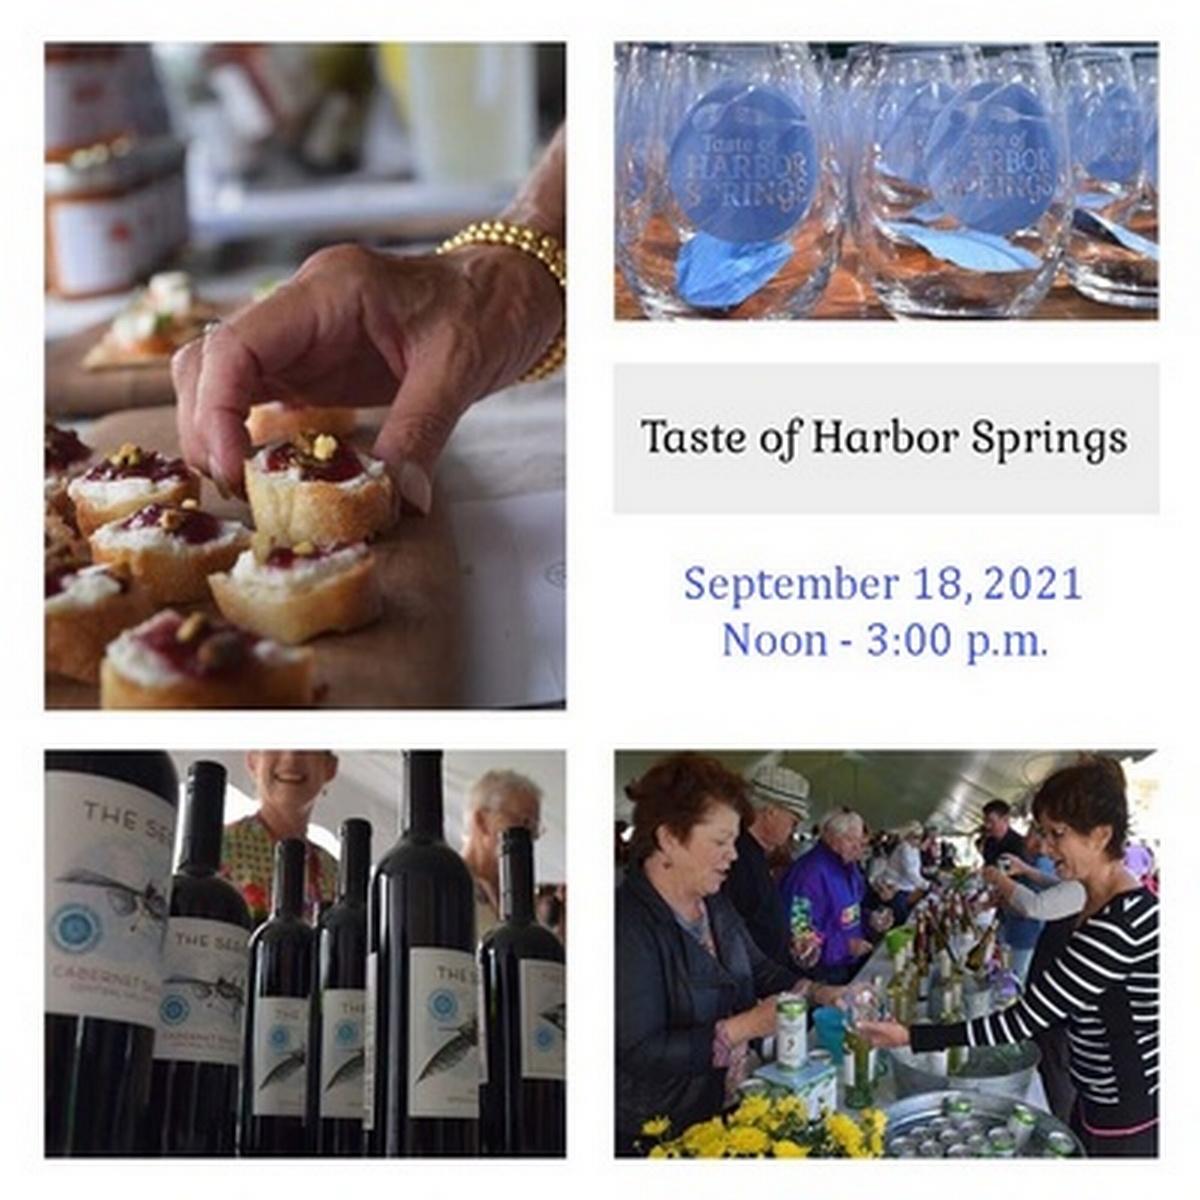 *26th Annual Taste of Harbor Springs 2021 Sep 18, 2021 Harbor